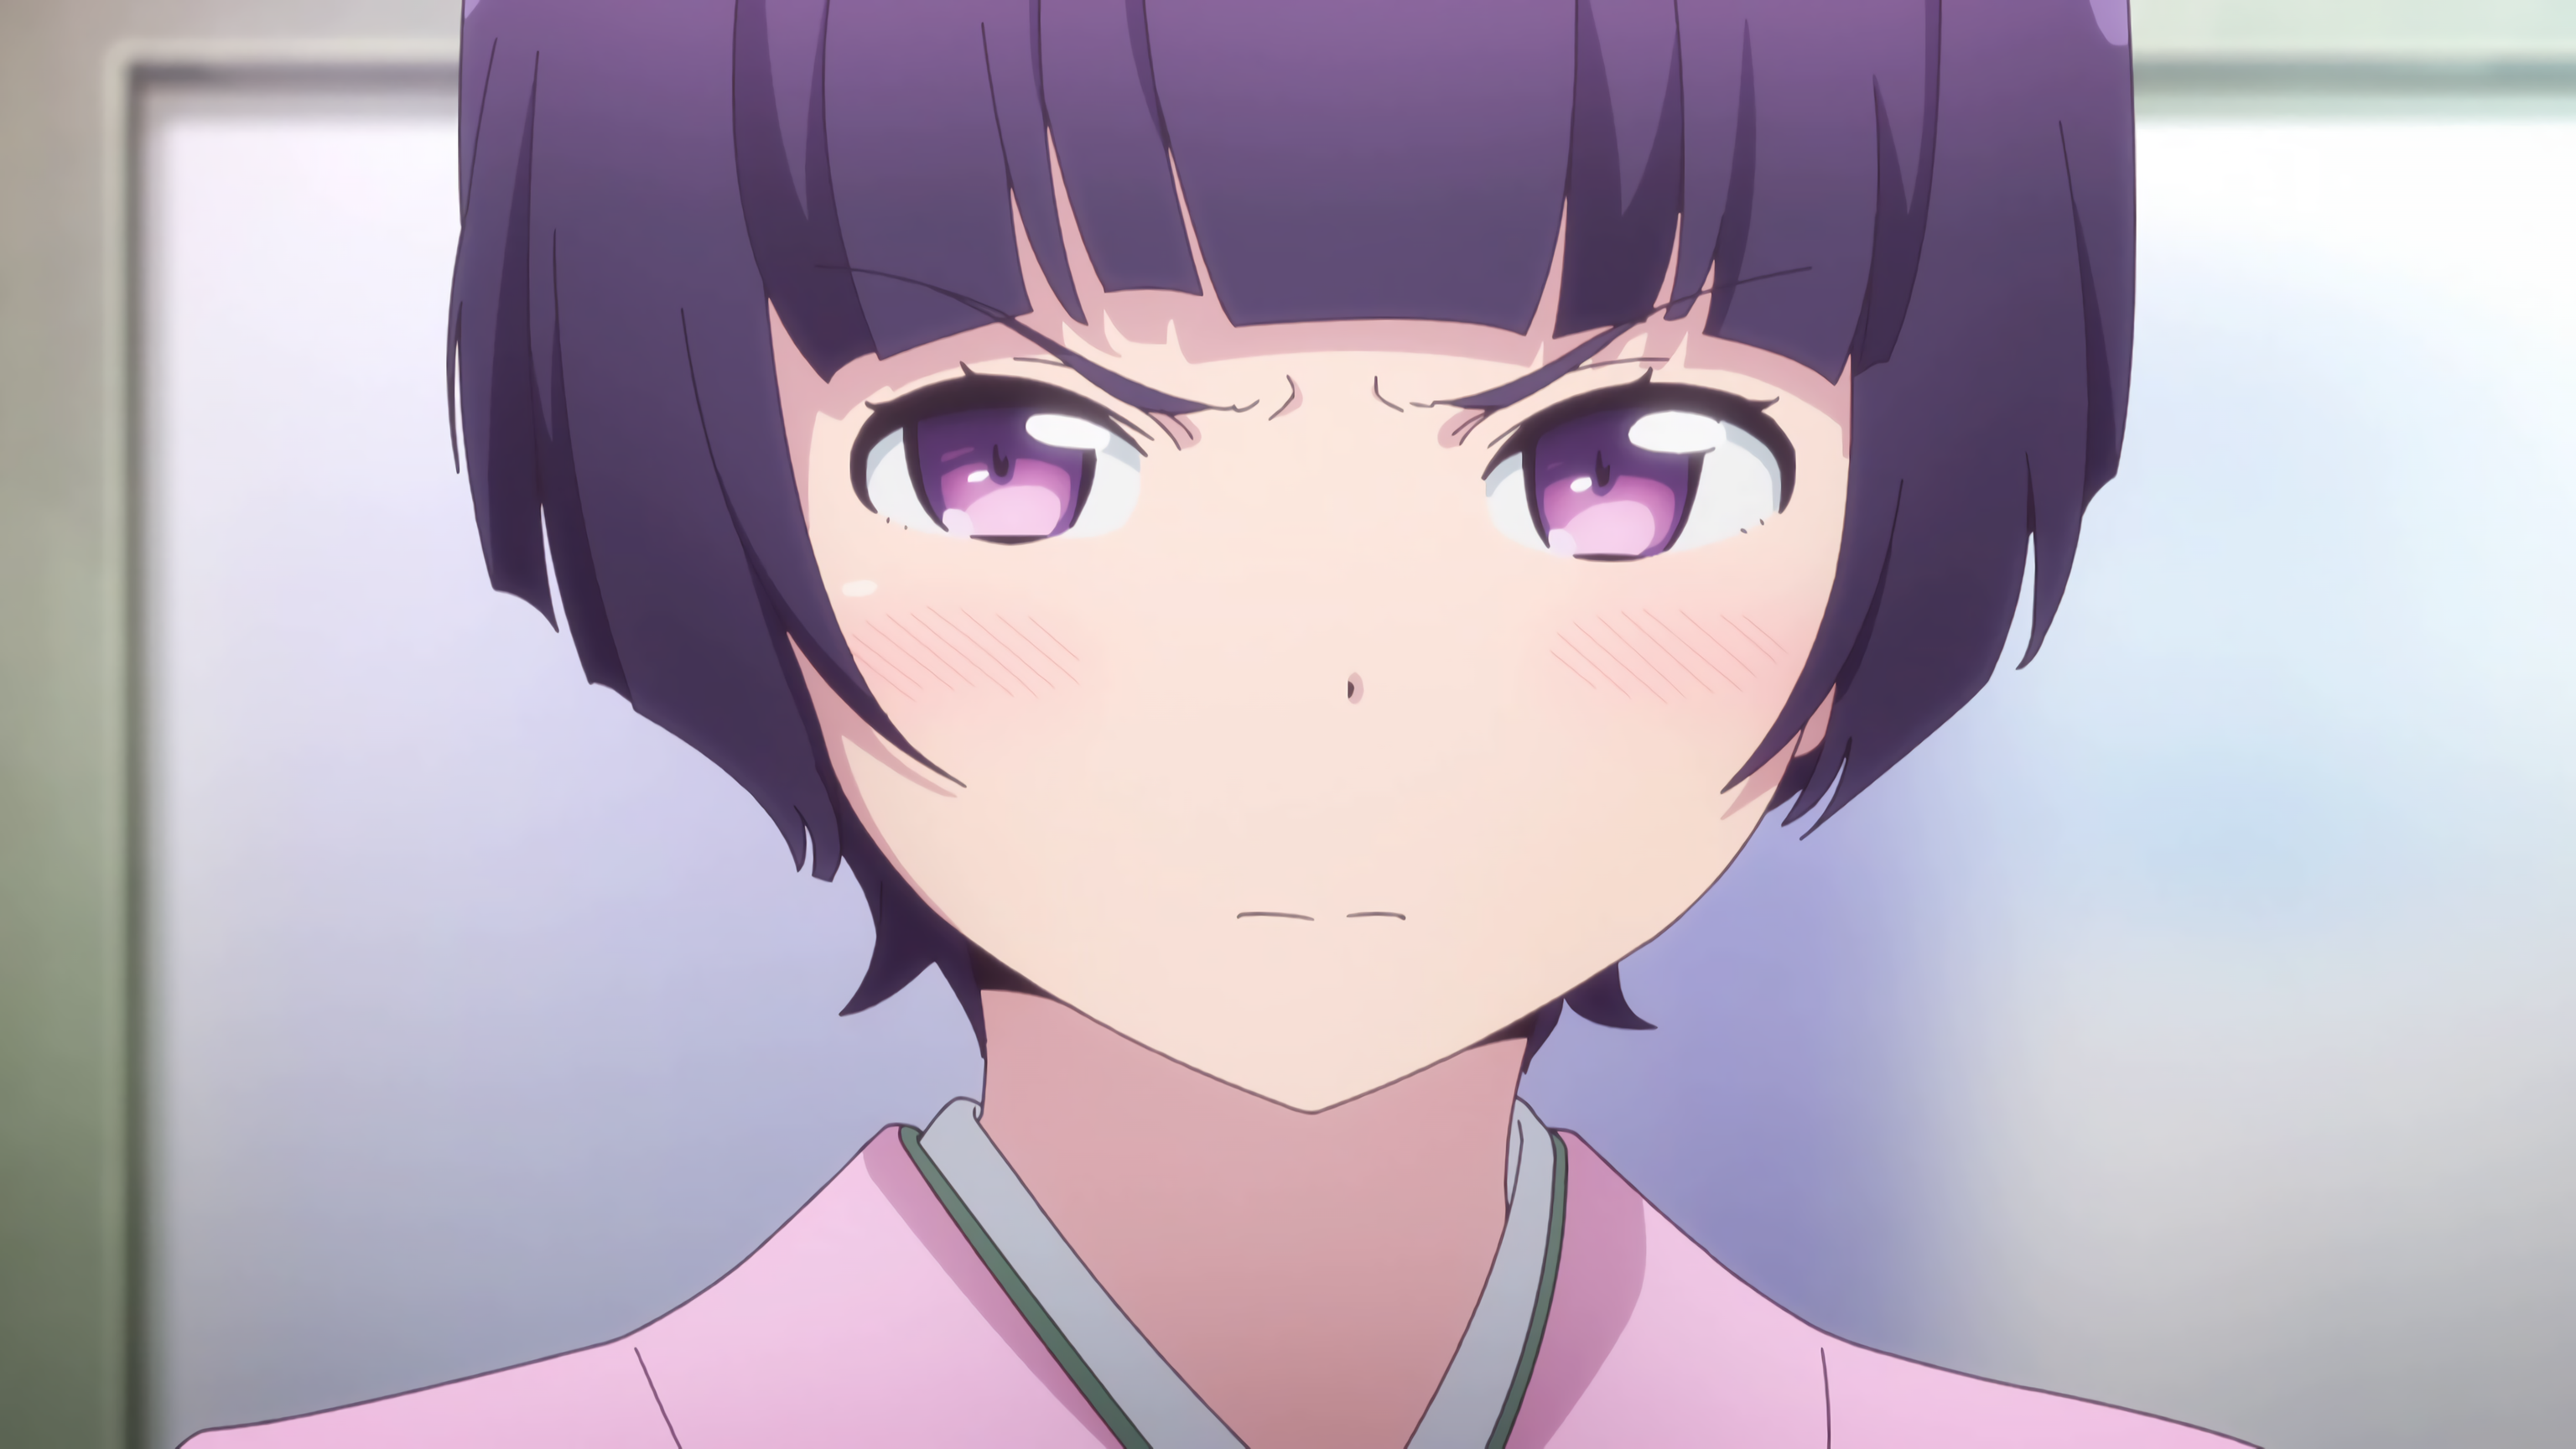 Anime 3072x1728 Eromanga-sensei Senju Muramasa anime girls purple eyes purple hair angry anime face